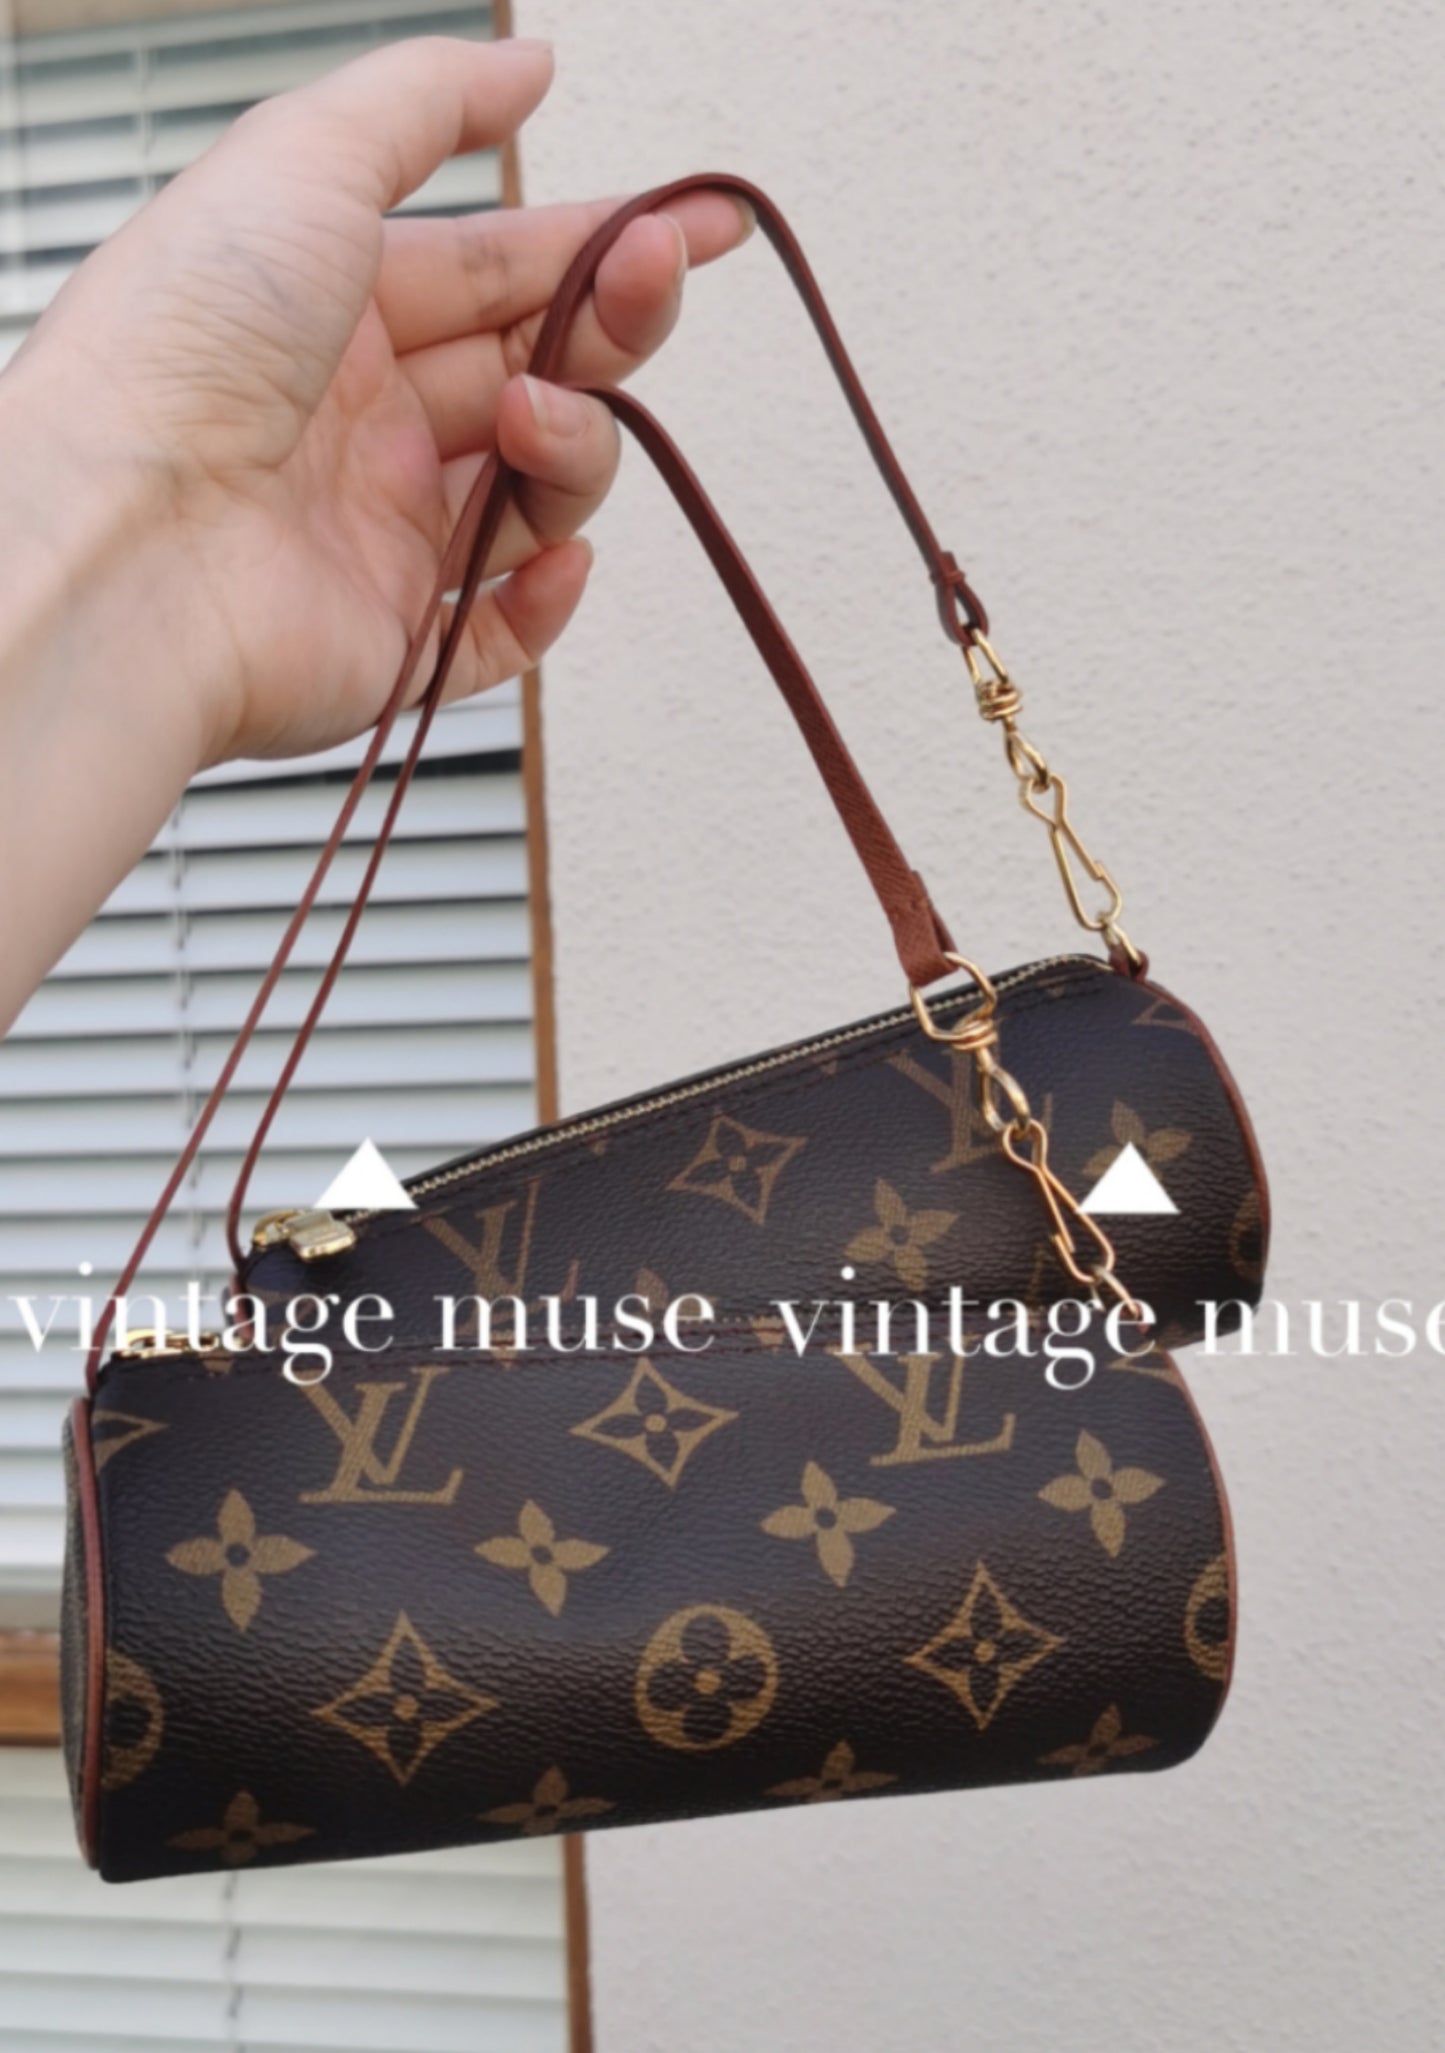 Louis Vuitton Mini Ellipse Wristlet - Brown Mini Bags, Handbags